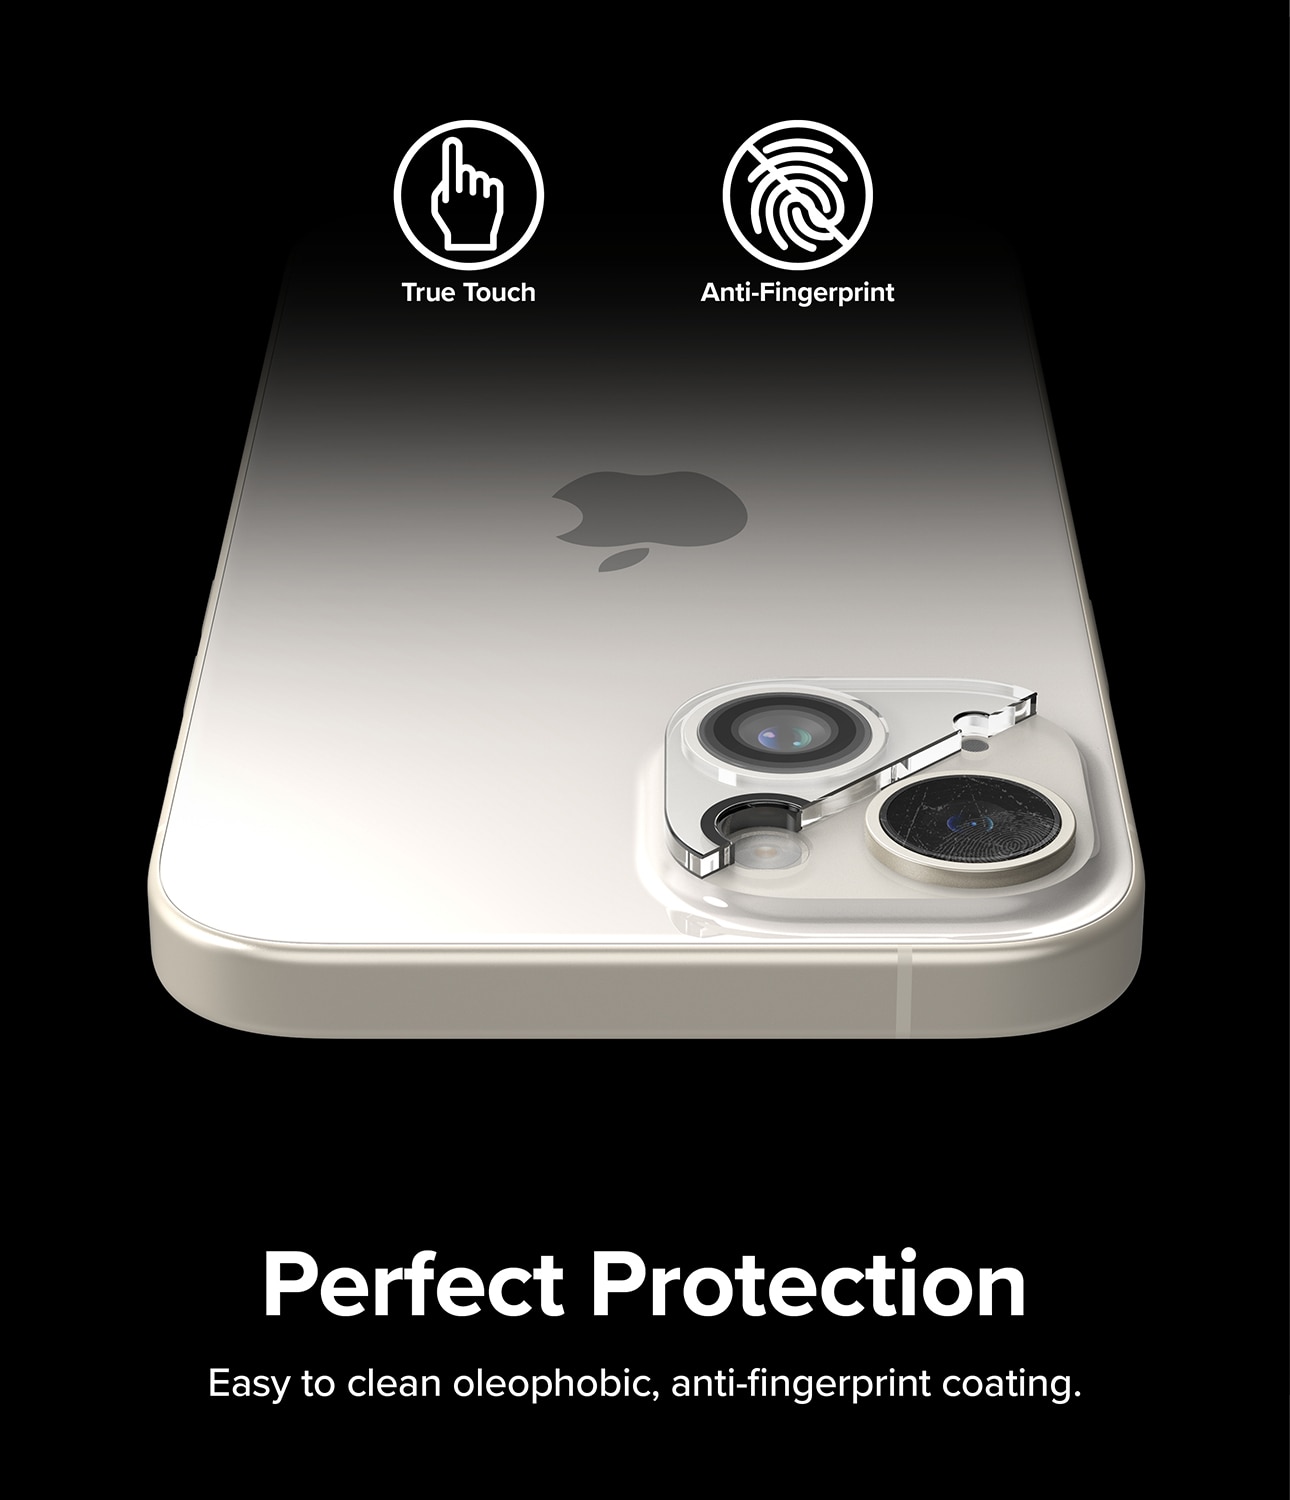 iPhone 15 Plus Camera Protector Glass (2-pack) Transparent